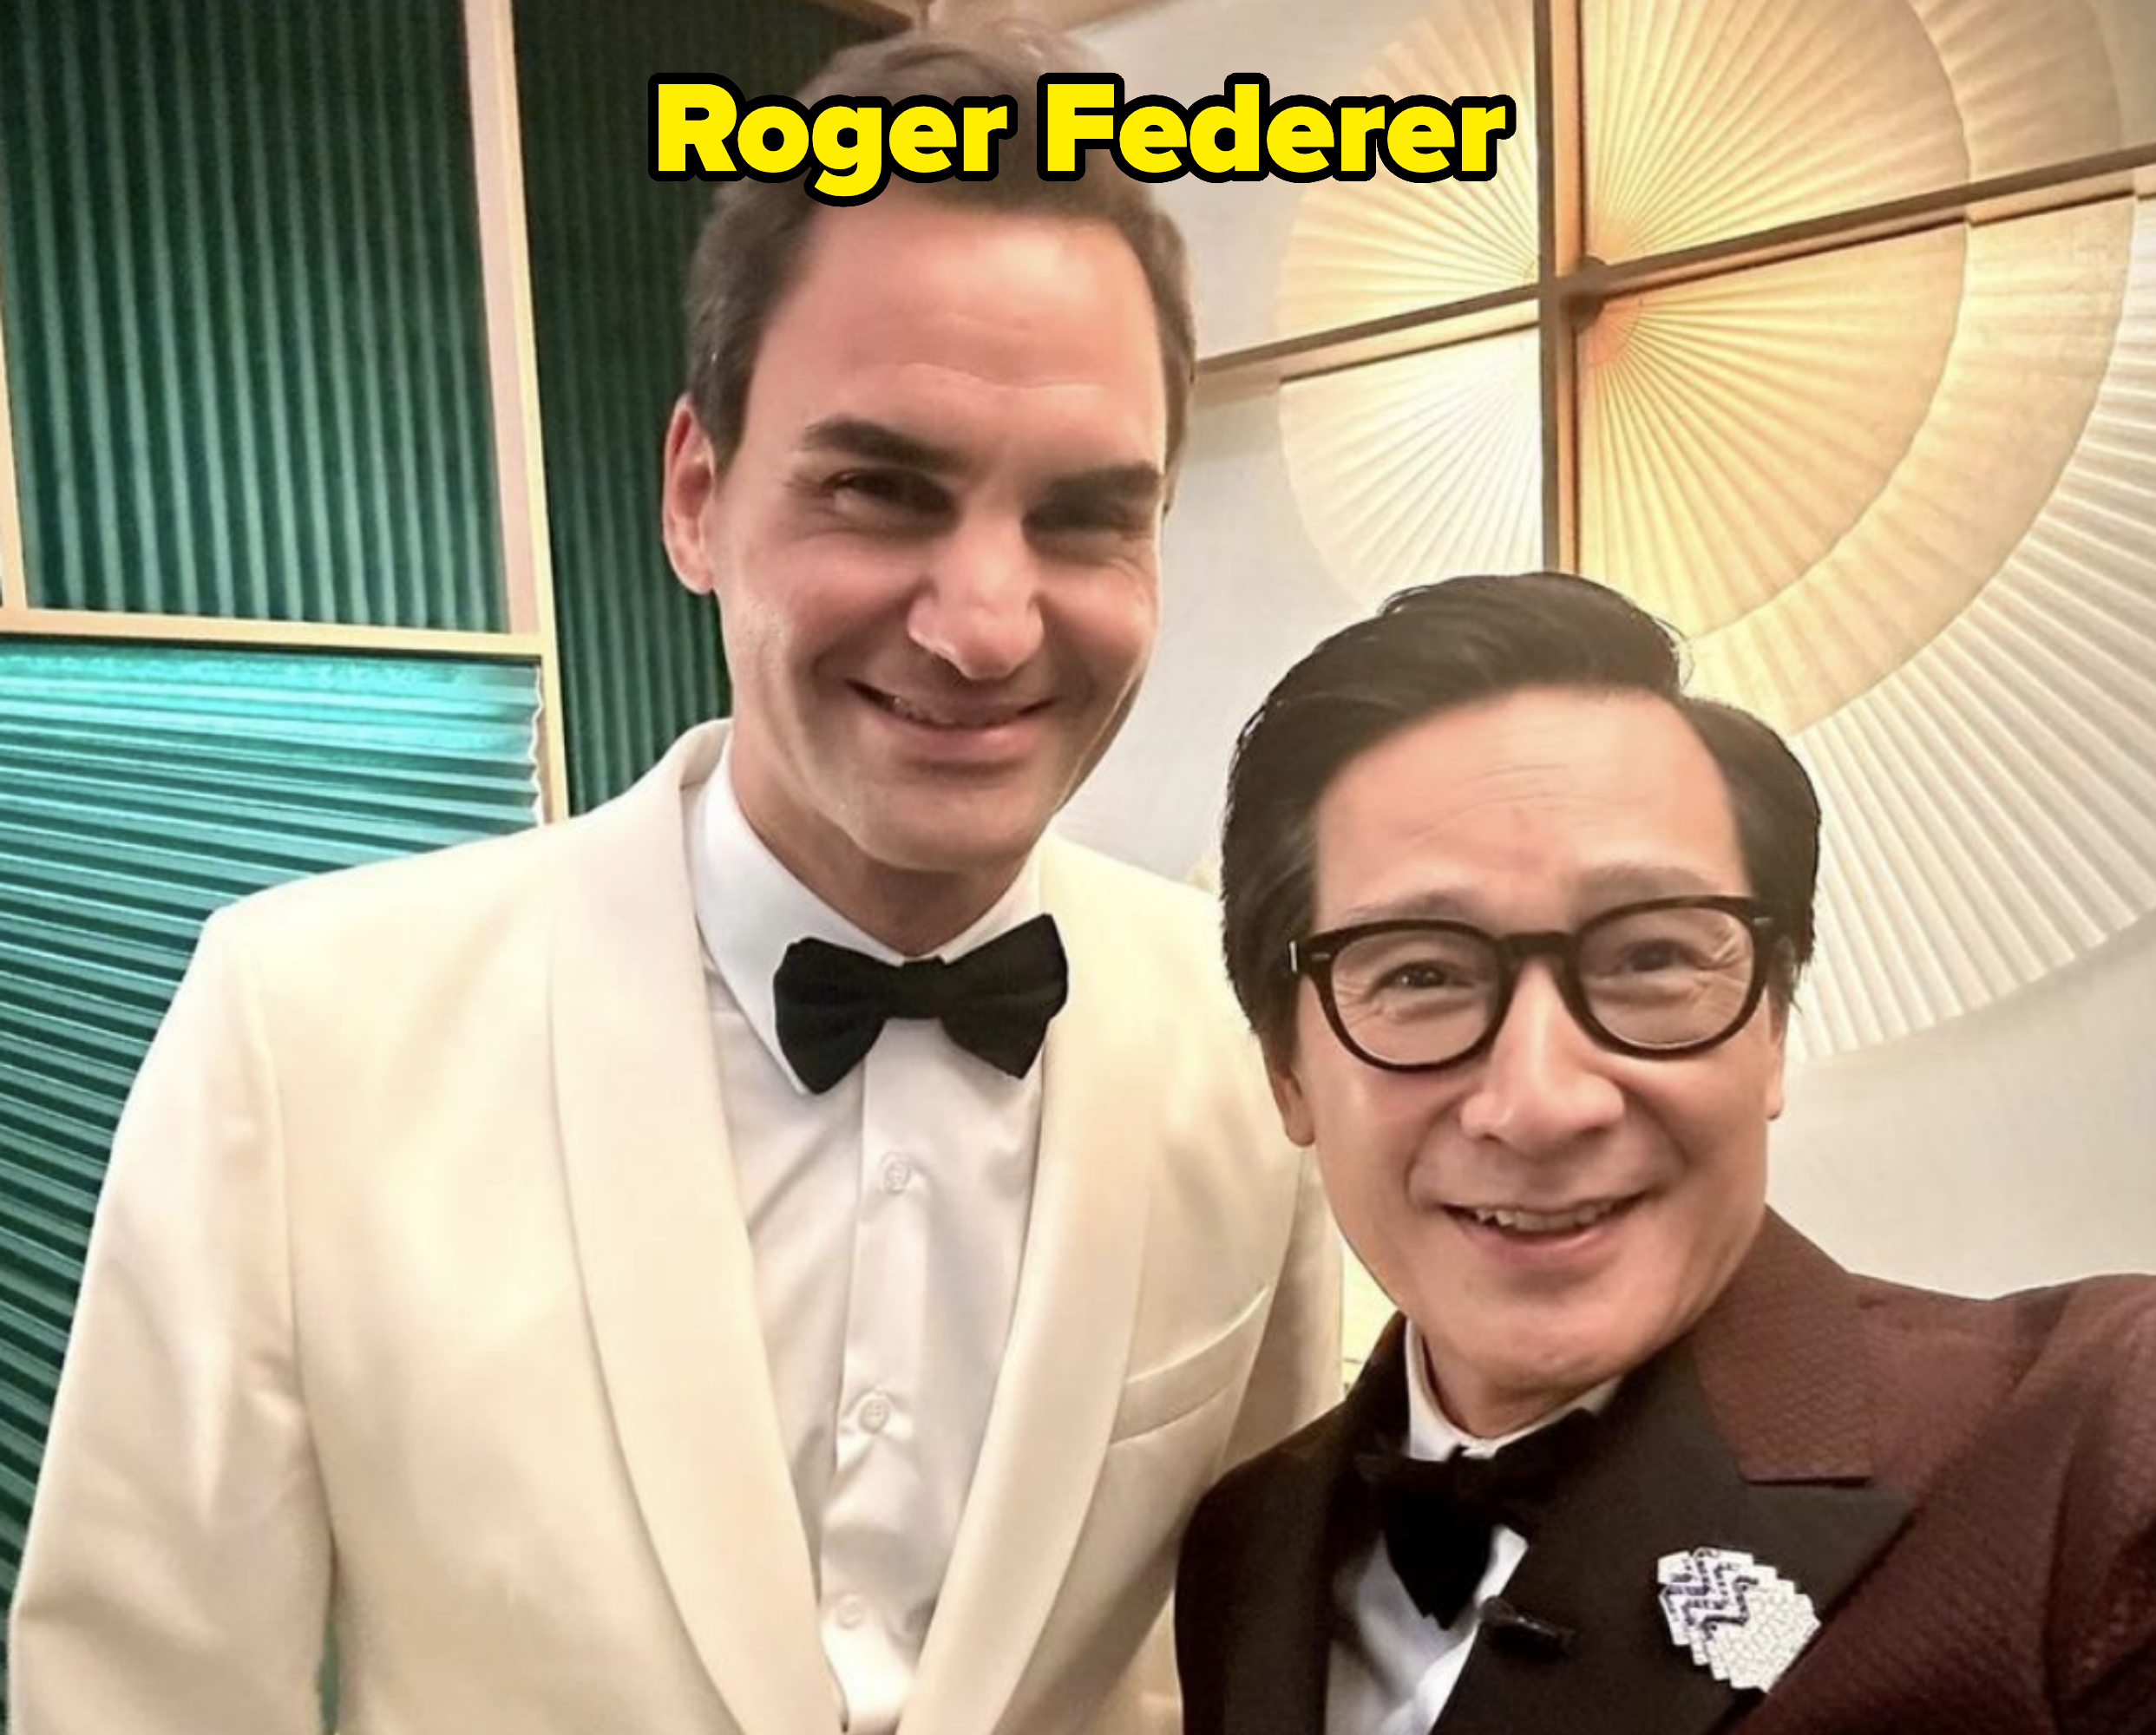 Roger Federer and Ke Huy Quan